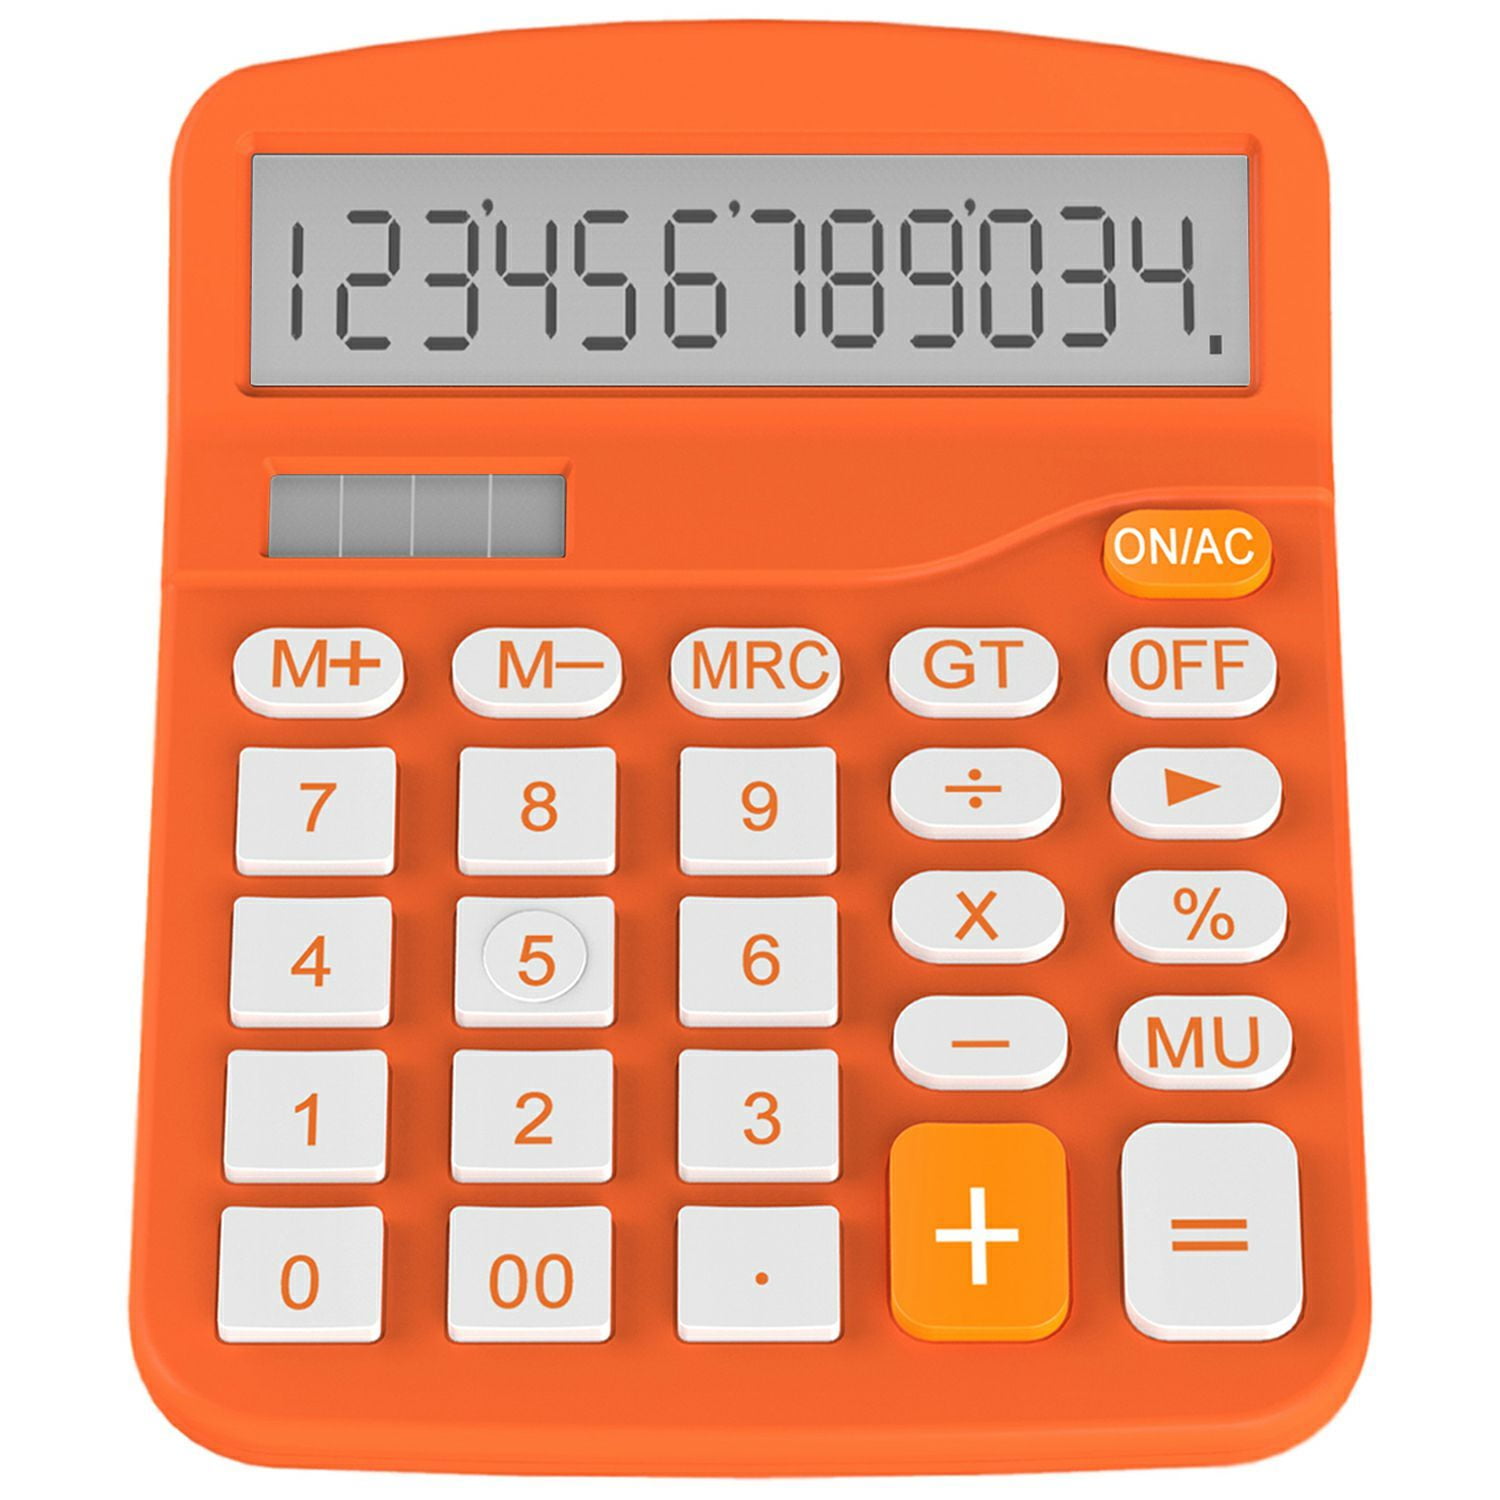 Meliya Desktop Calculator Standard Functional Office Calculator Battery Powered Electronic Calculator with 12 Digit Large Display,Orange